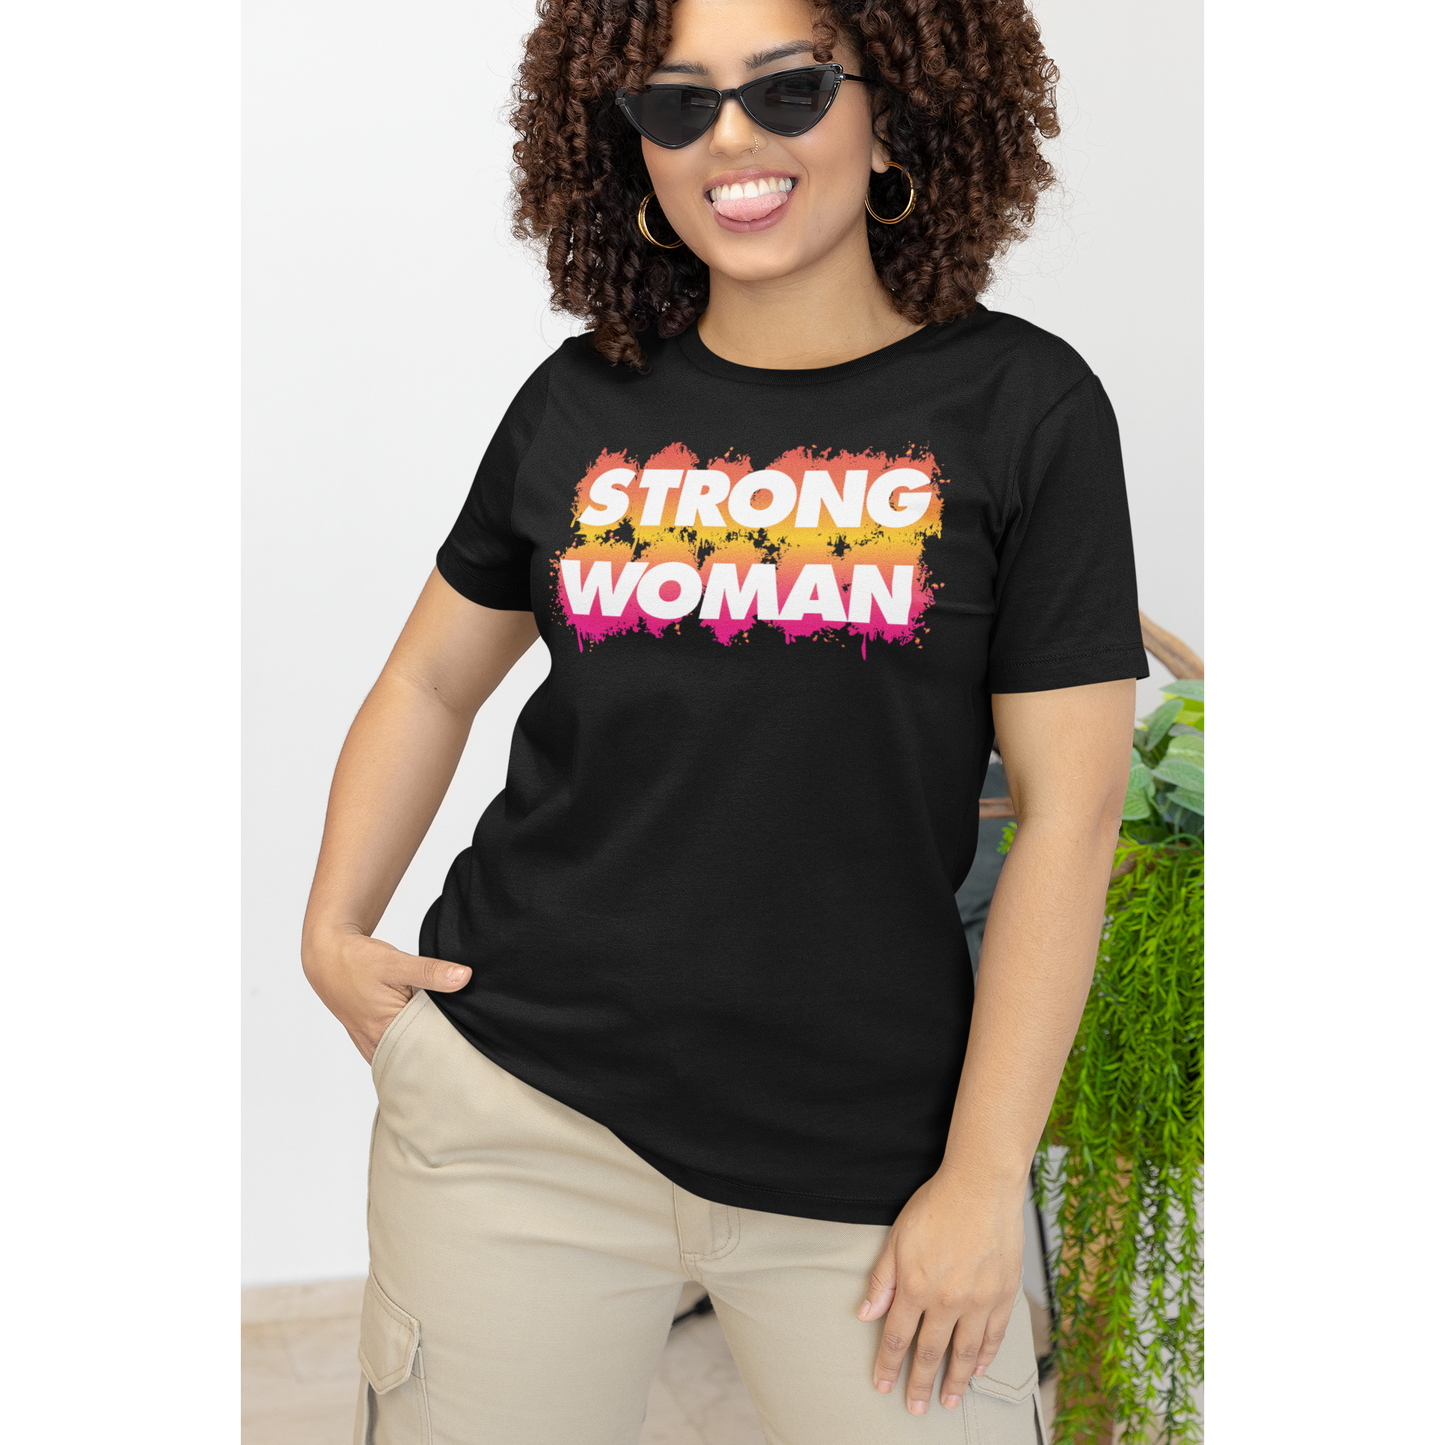 Strong Woman 2.0 Tee